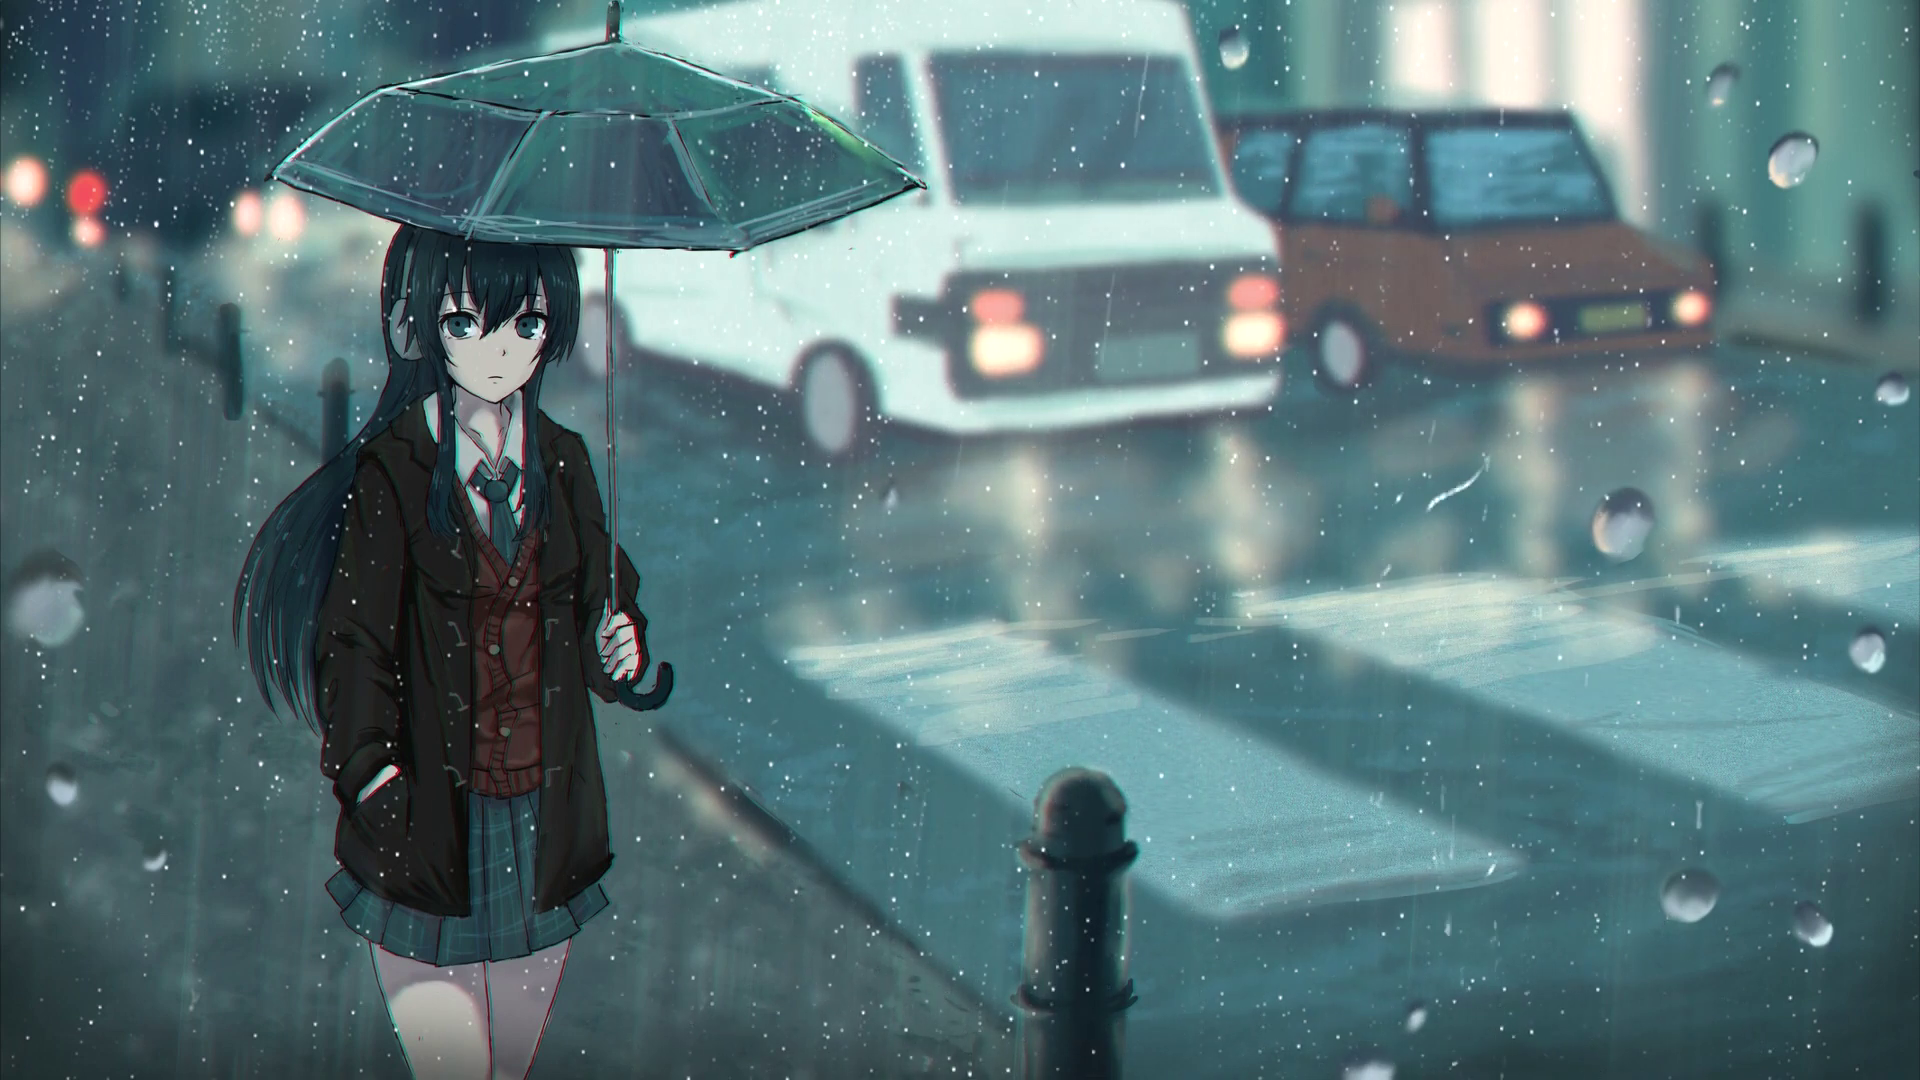 Anime Rainy Day Wallpaper Free Anime Rainy Day Background